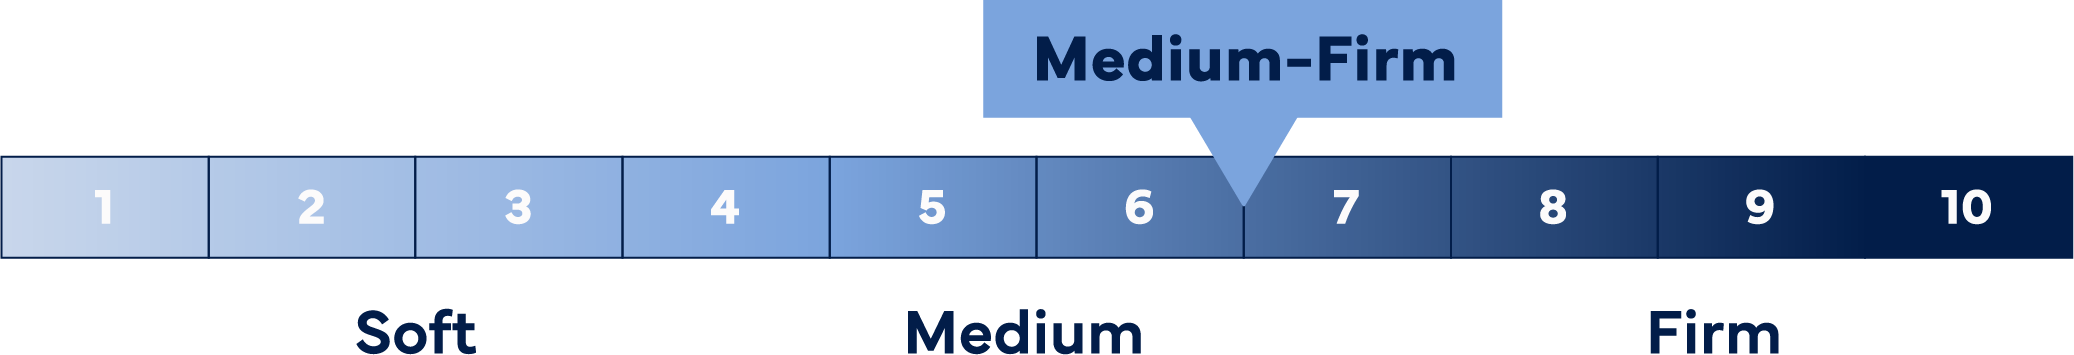 6.5: Medium-Firm